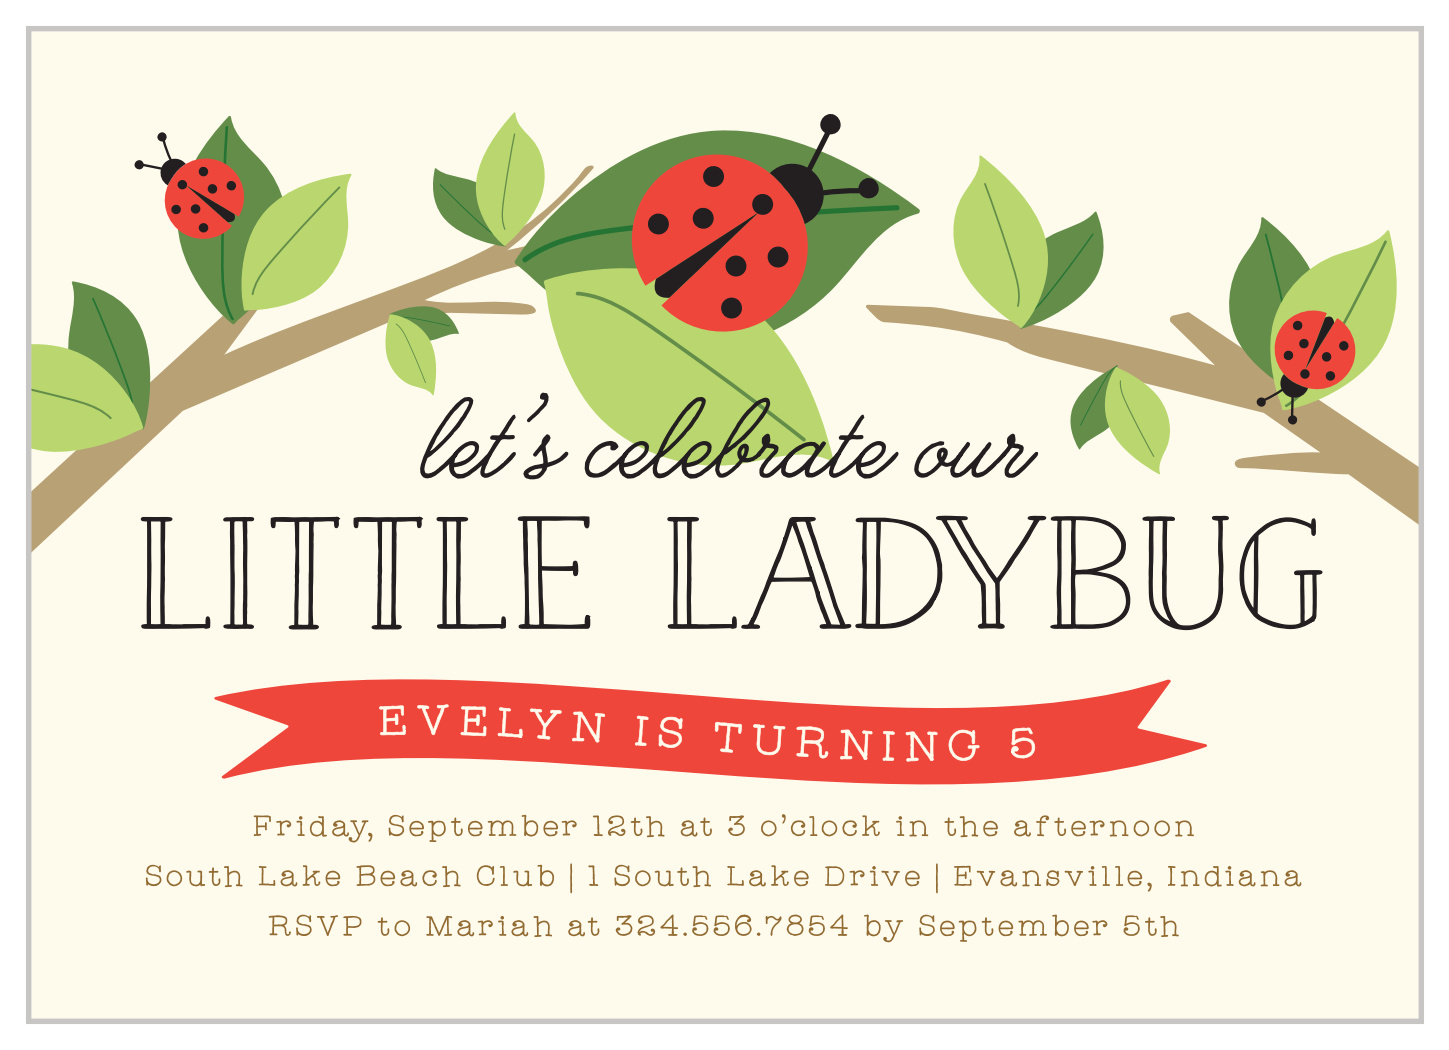 Little Ladybug Children's Birthday Invitations